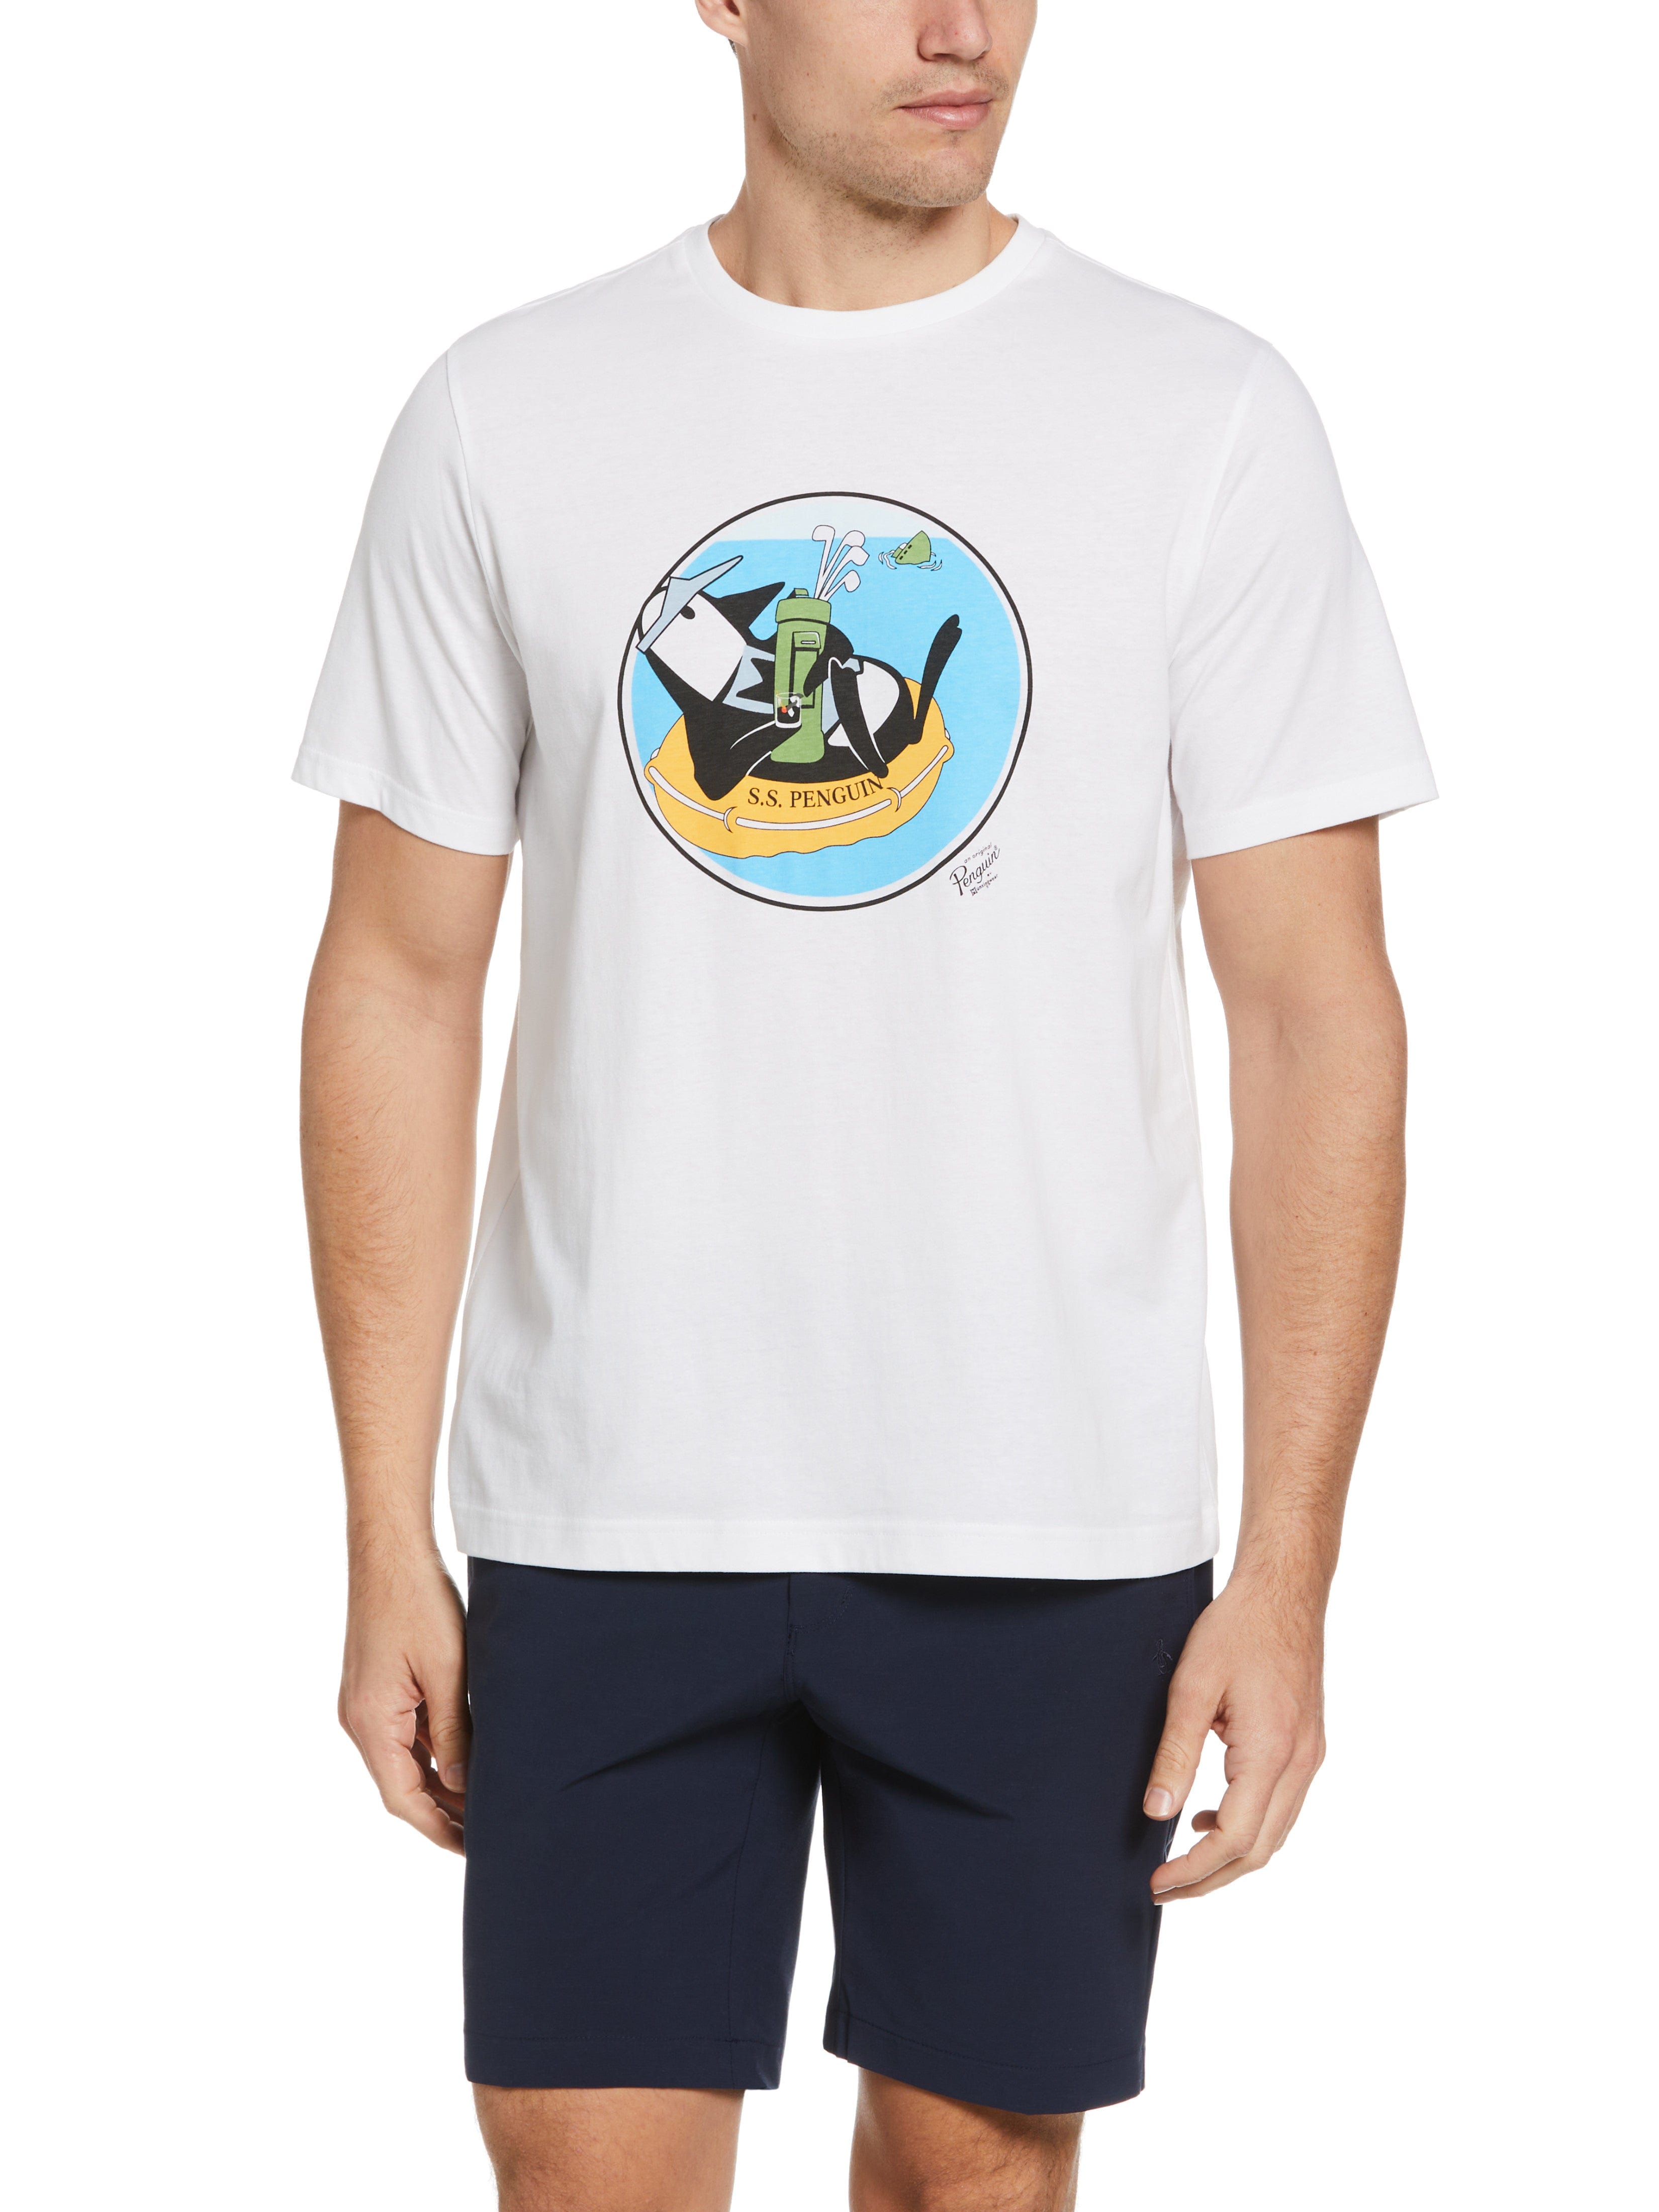 Original Penguin Mens Shipwreck Pete Graphic Golf T-Shirt, Size Medium, White, 100% Cotton | Golf Apparel Shop